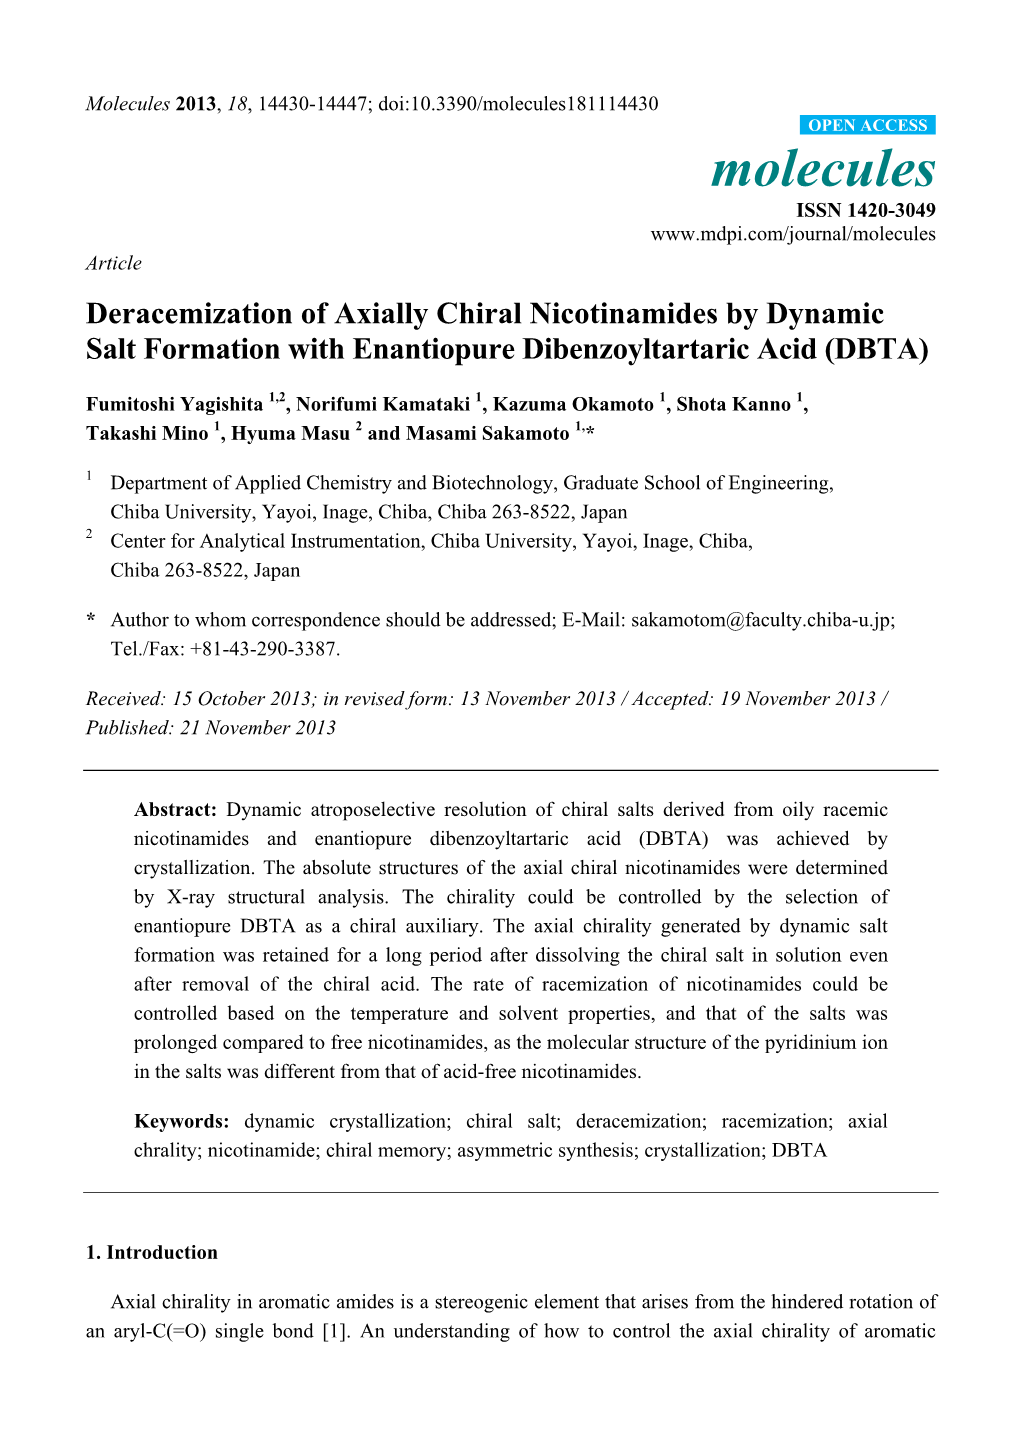 Deracemization of Axially Chiral Nicotinamides by Dynamic Salt Formation with Enantiopure Dibenzoyltartaric Acid (DBTA)